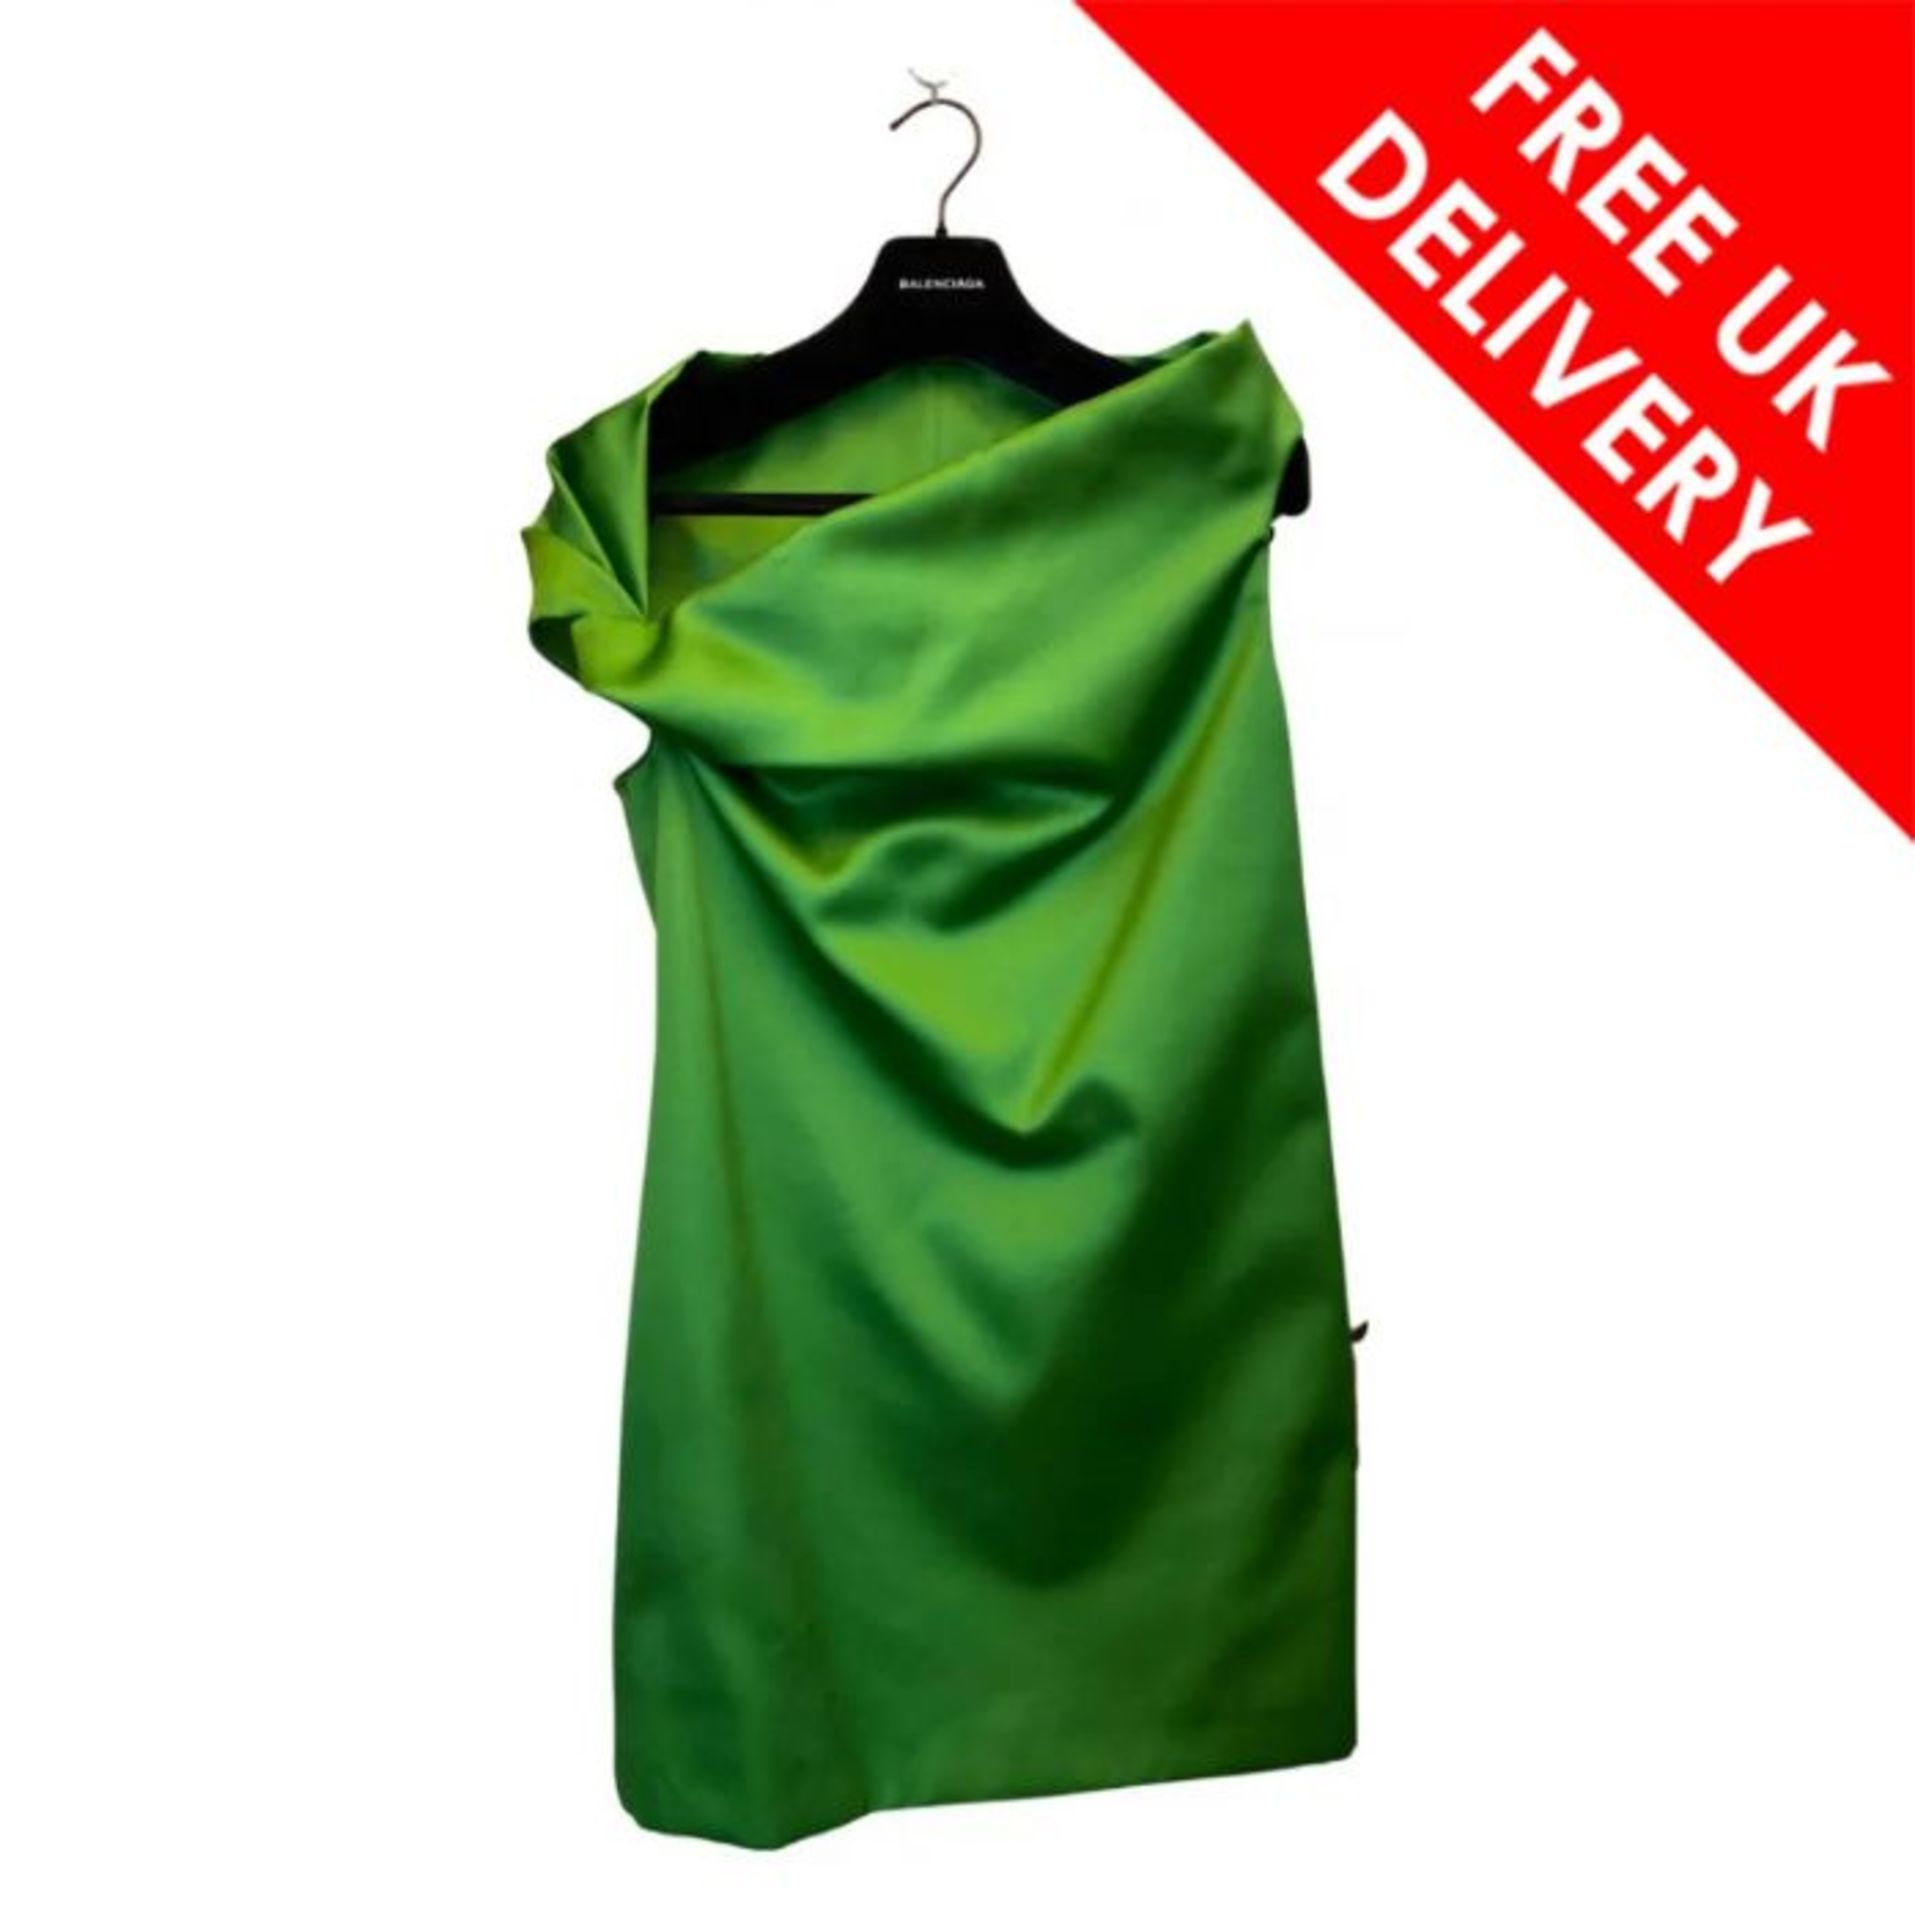 Balenciaga One-Twist Mini Dress, Green, UK 8